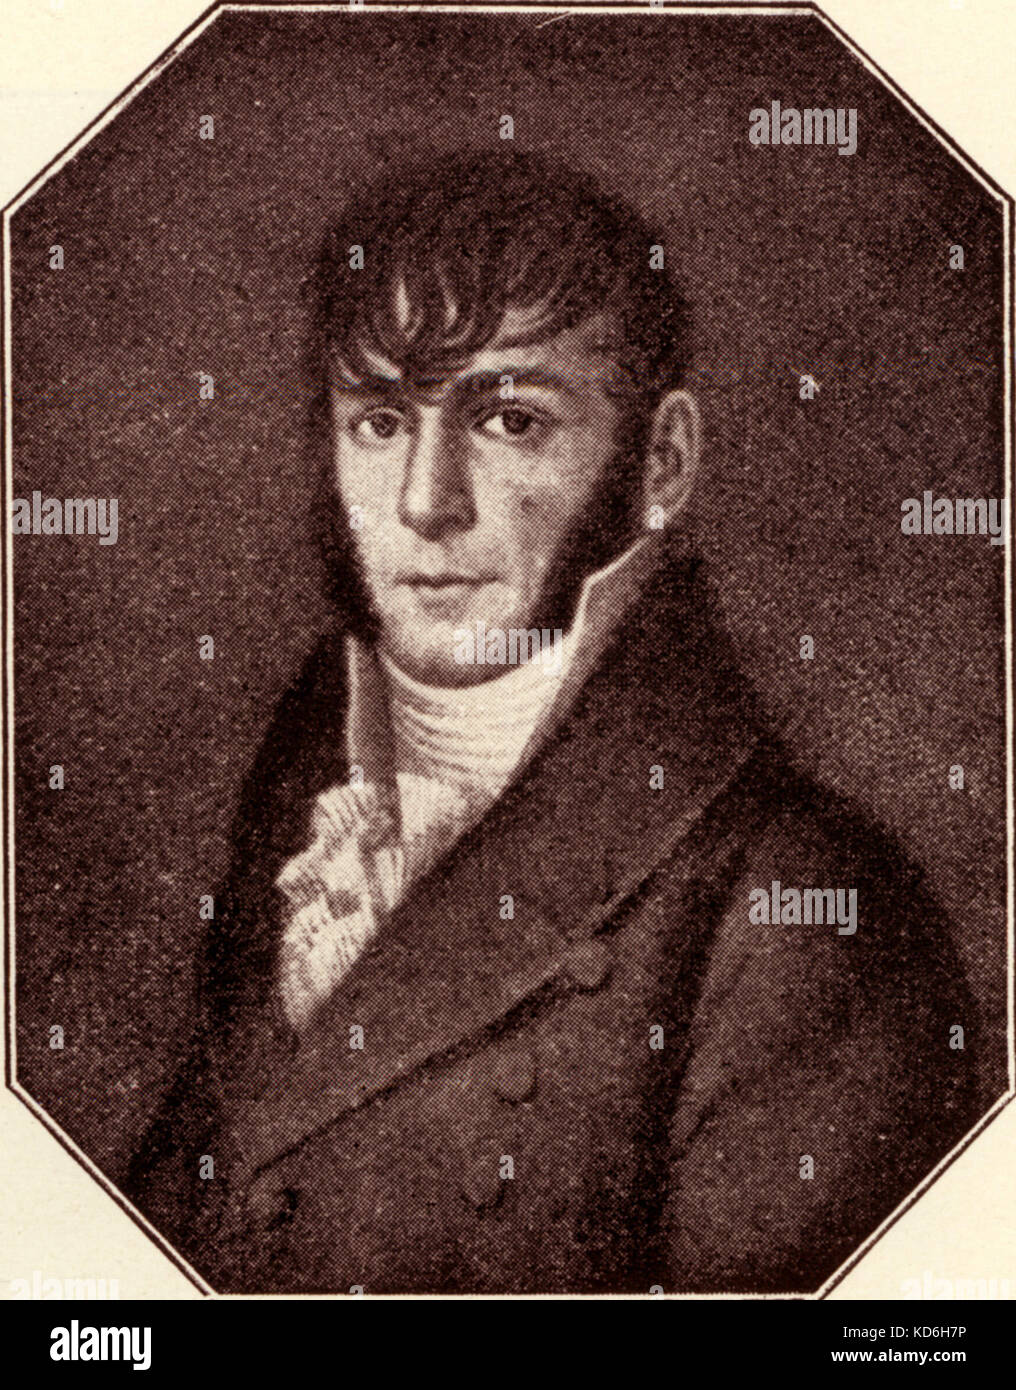 Le père de Robert Schumann Schumann Août. Schumann : compositeur allemand, 1810-1856 Banque D'Images